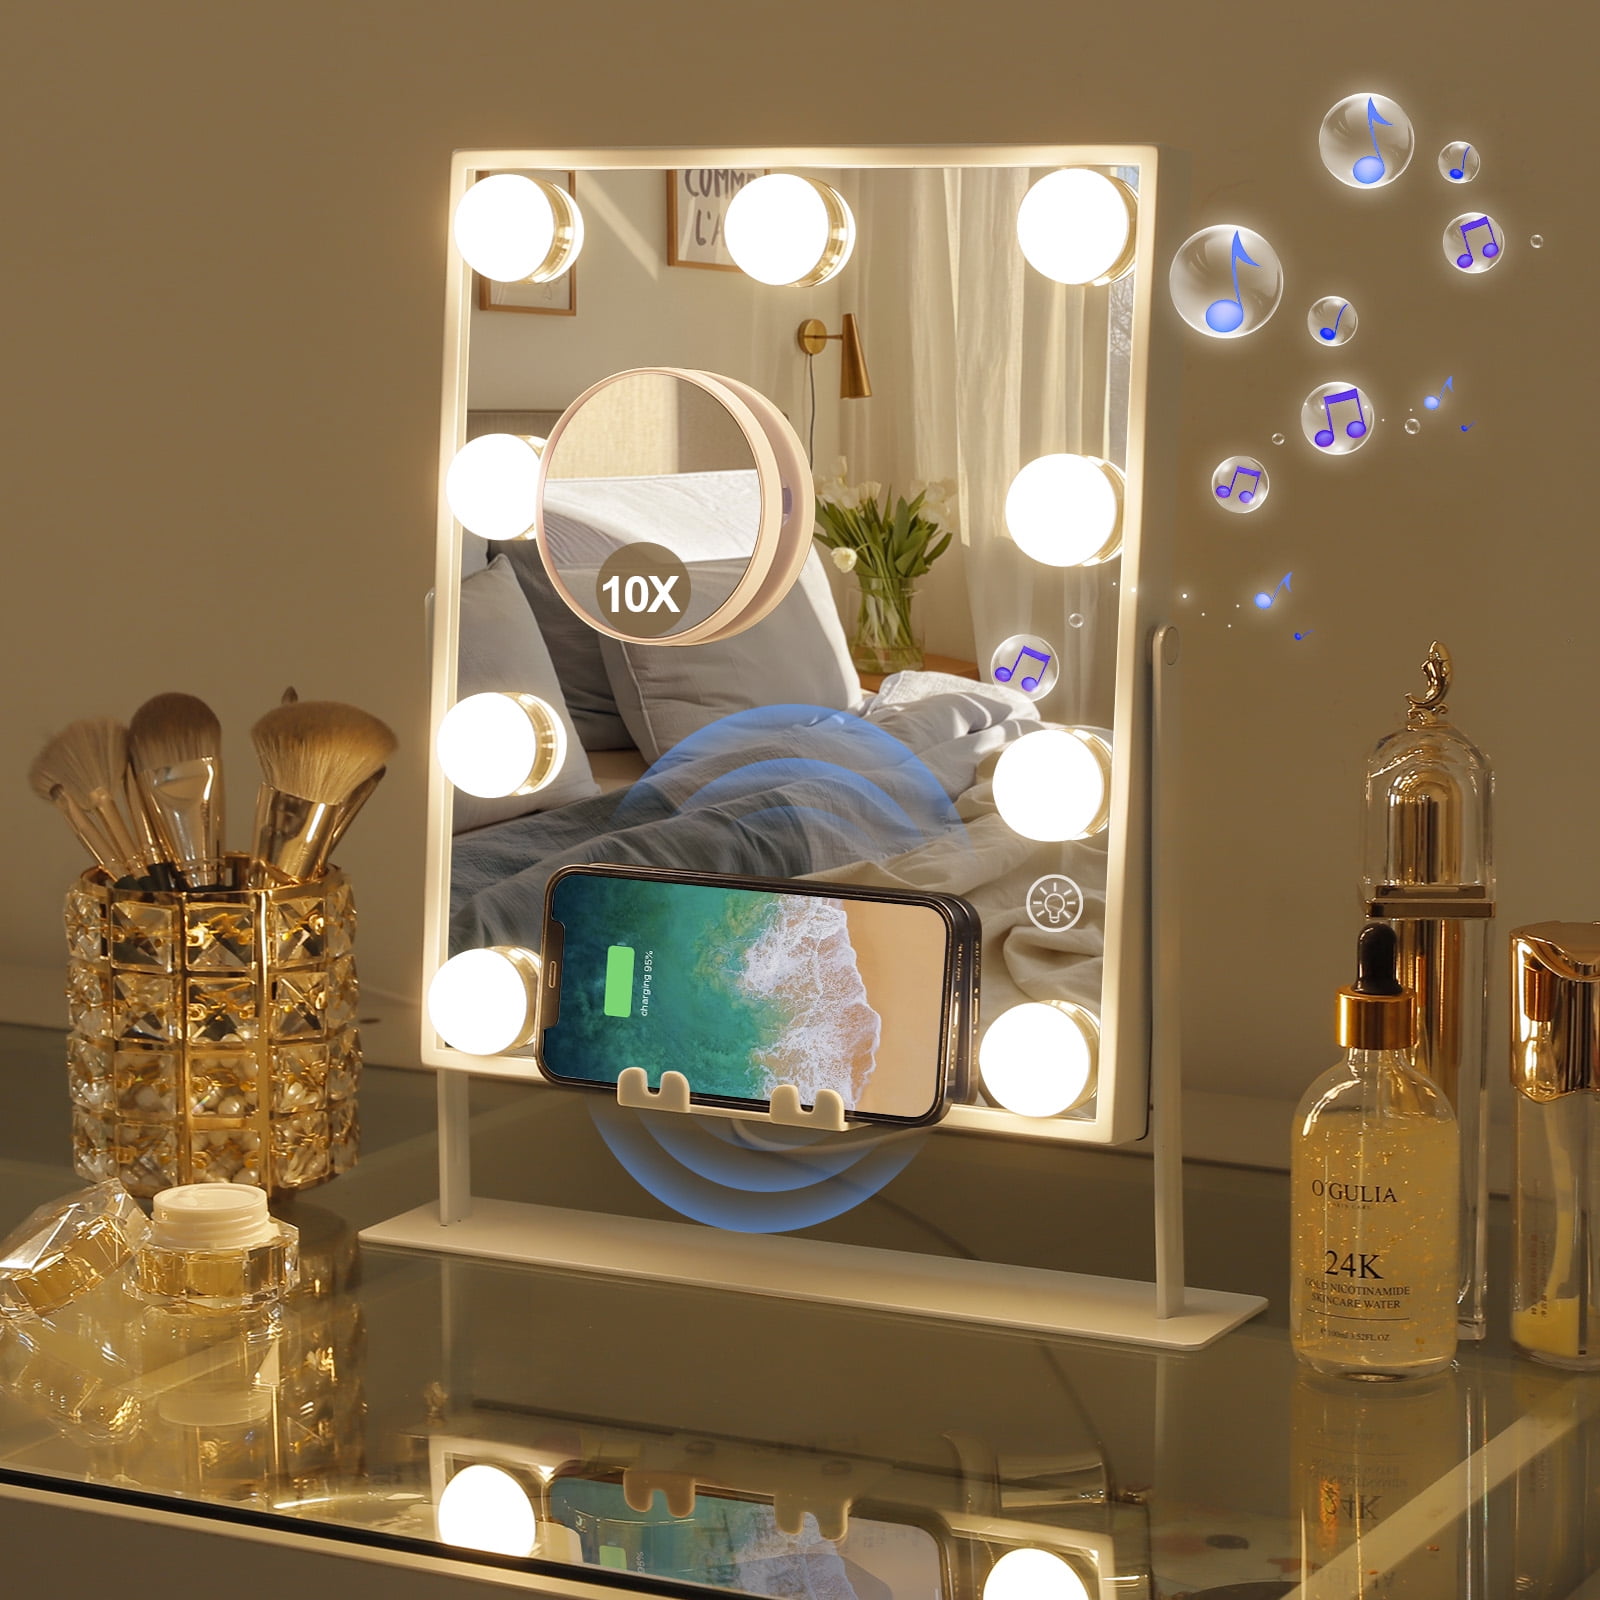  Fenair Vanity Mirror with Lights and Bluetooth